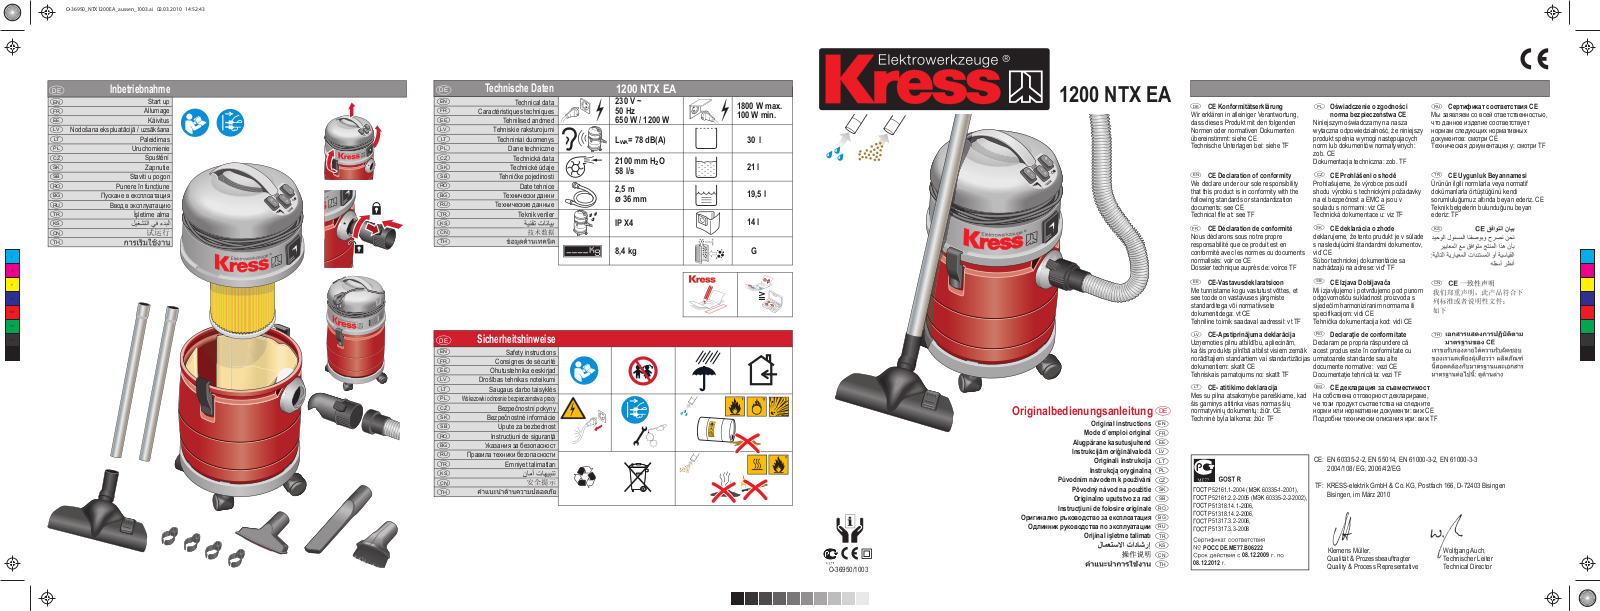 Kress 1200 NTX EA Manual